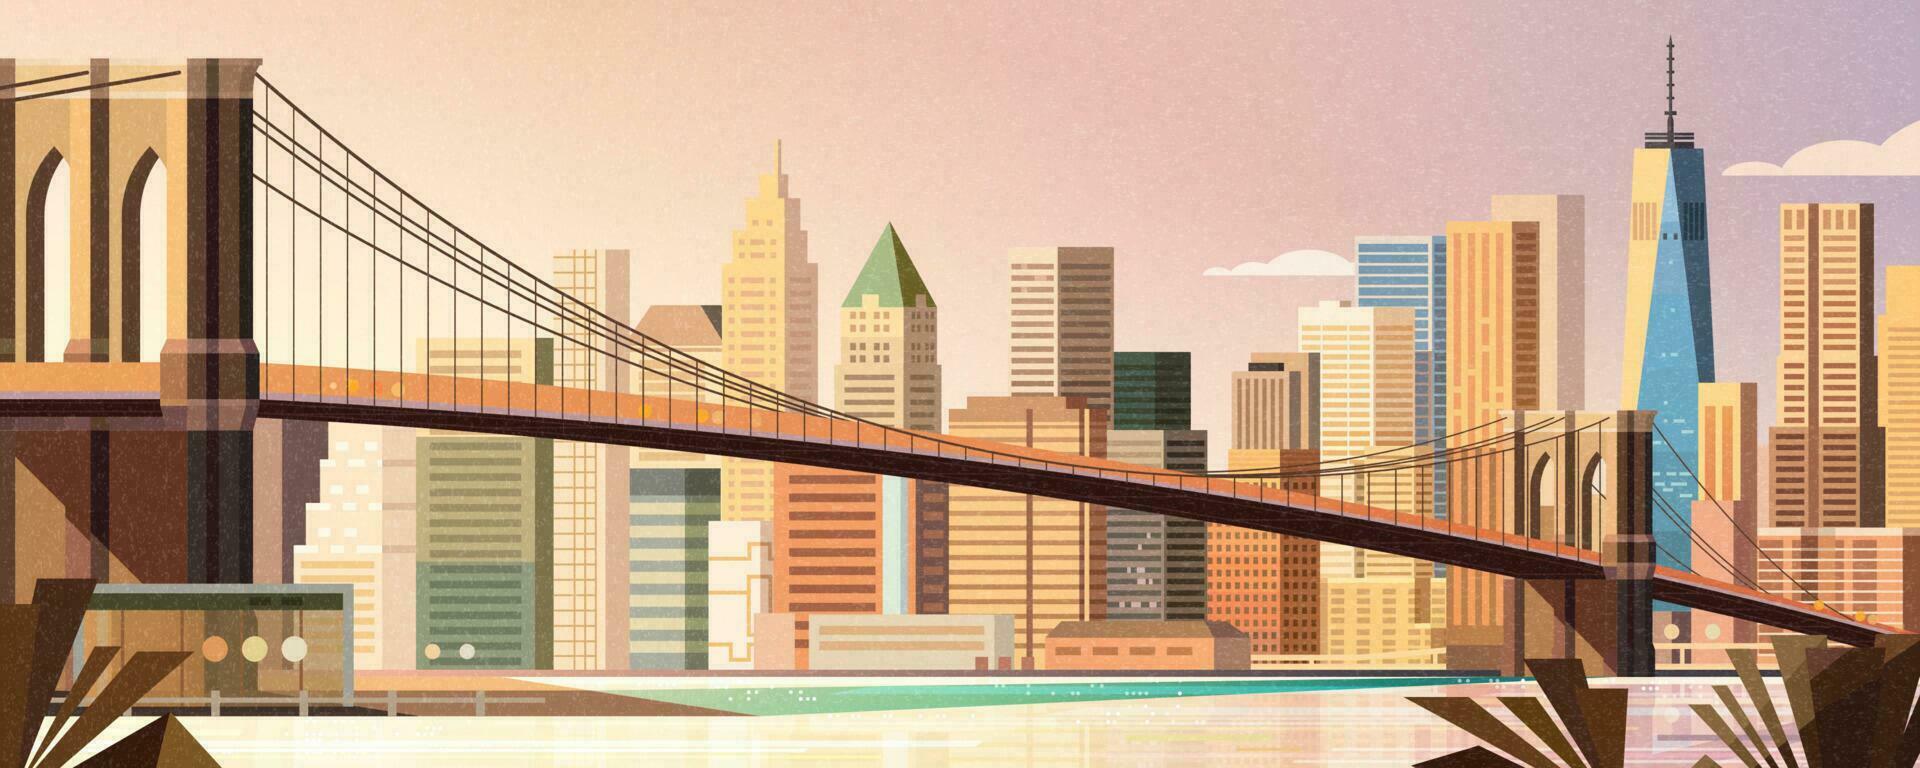 Brooklyn bridge and Manhattan skyline in flat style, New York City scene vector